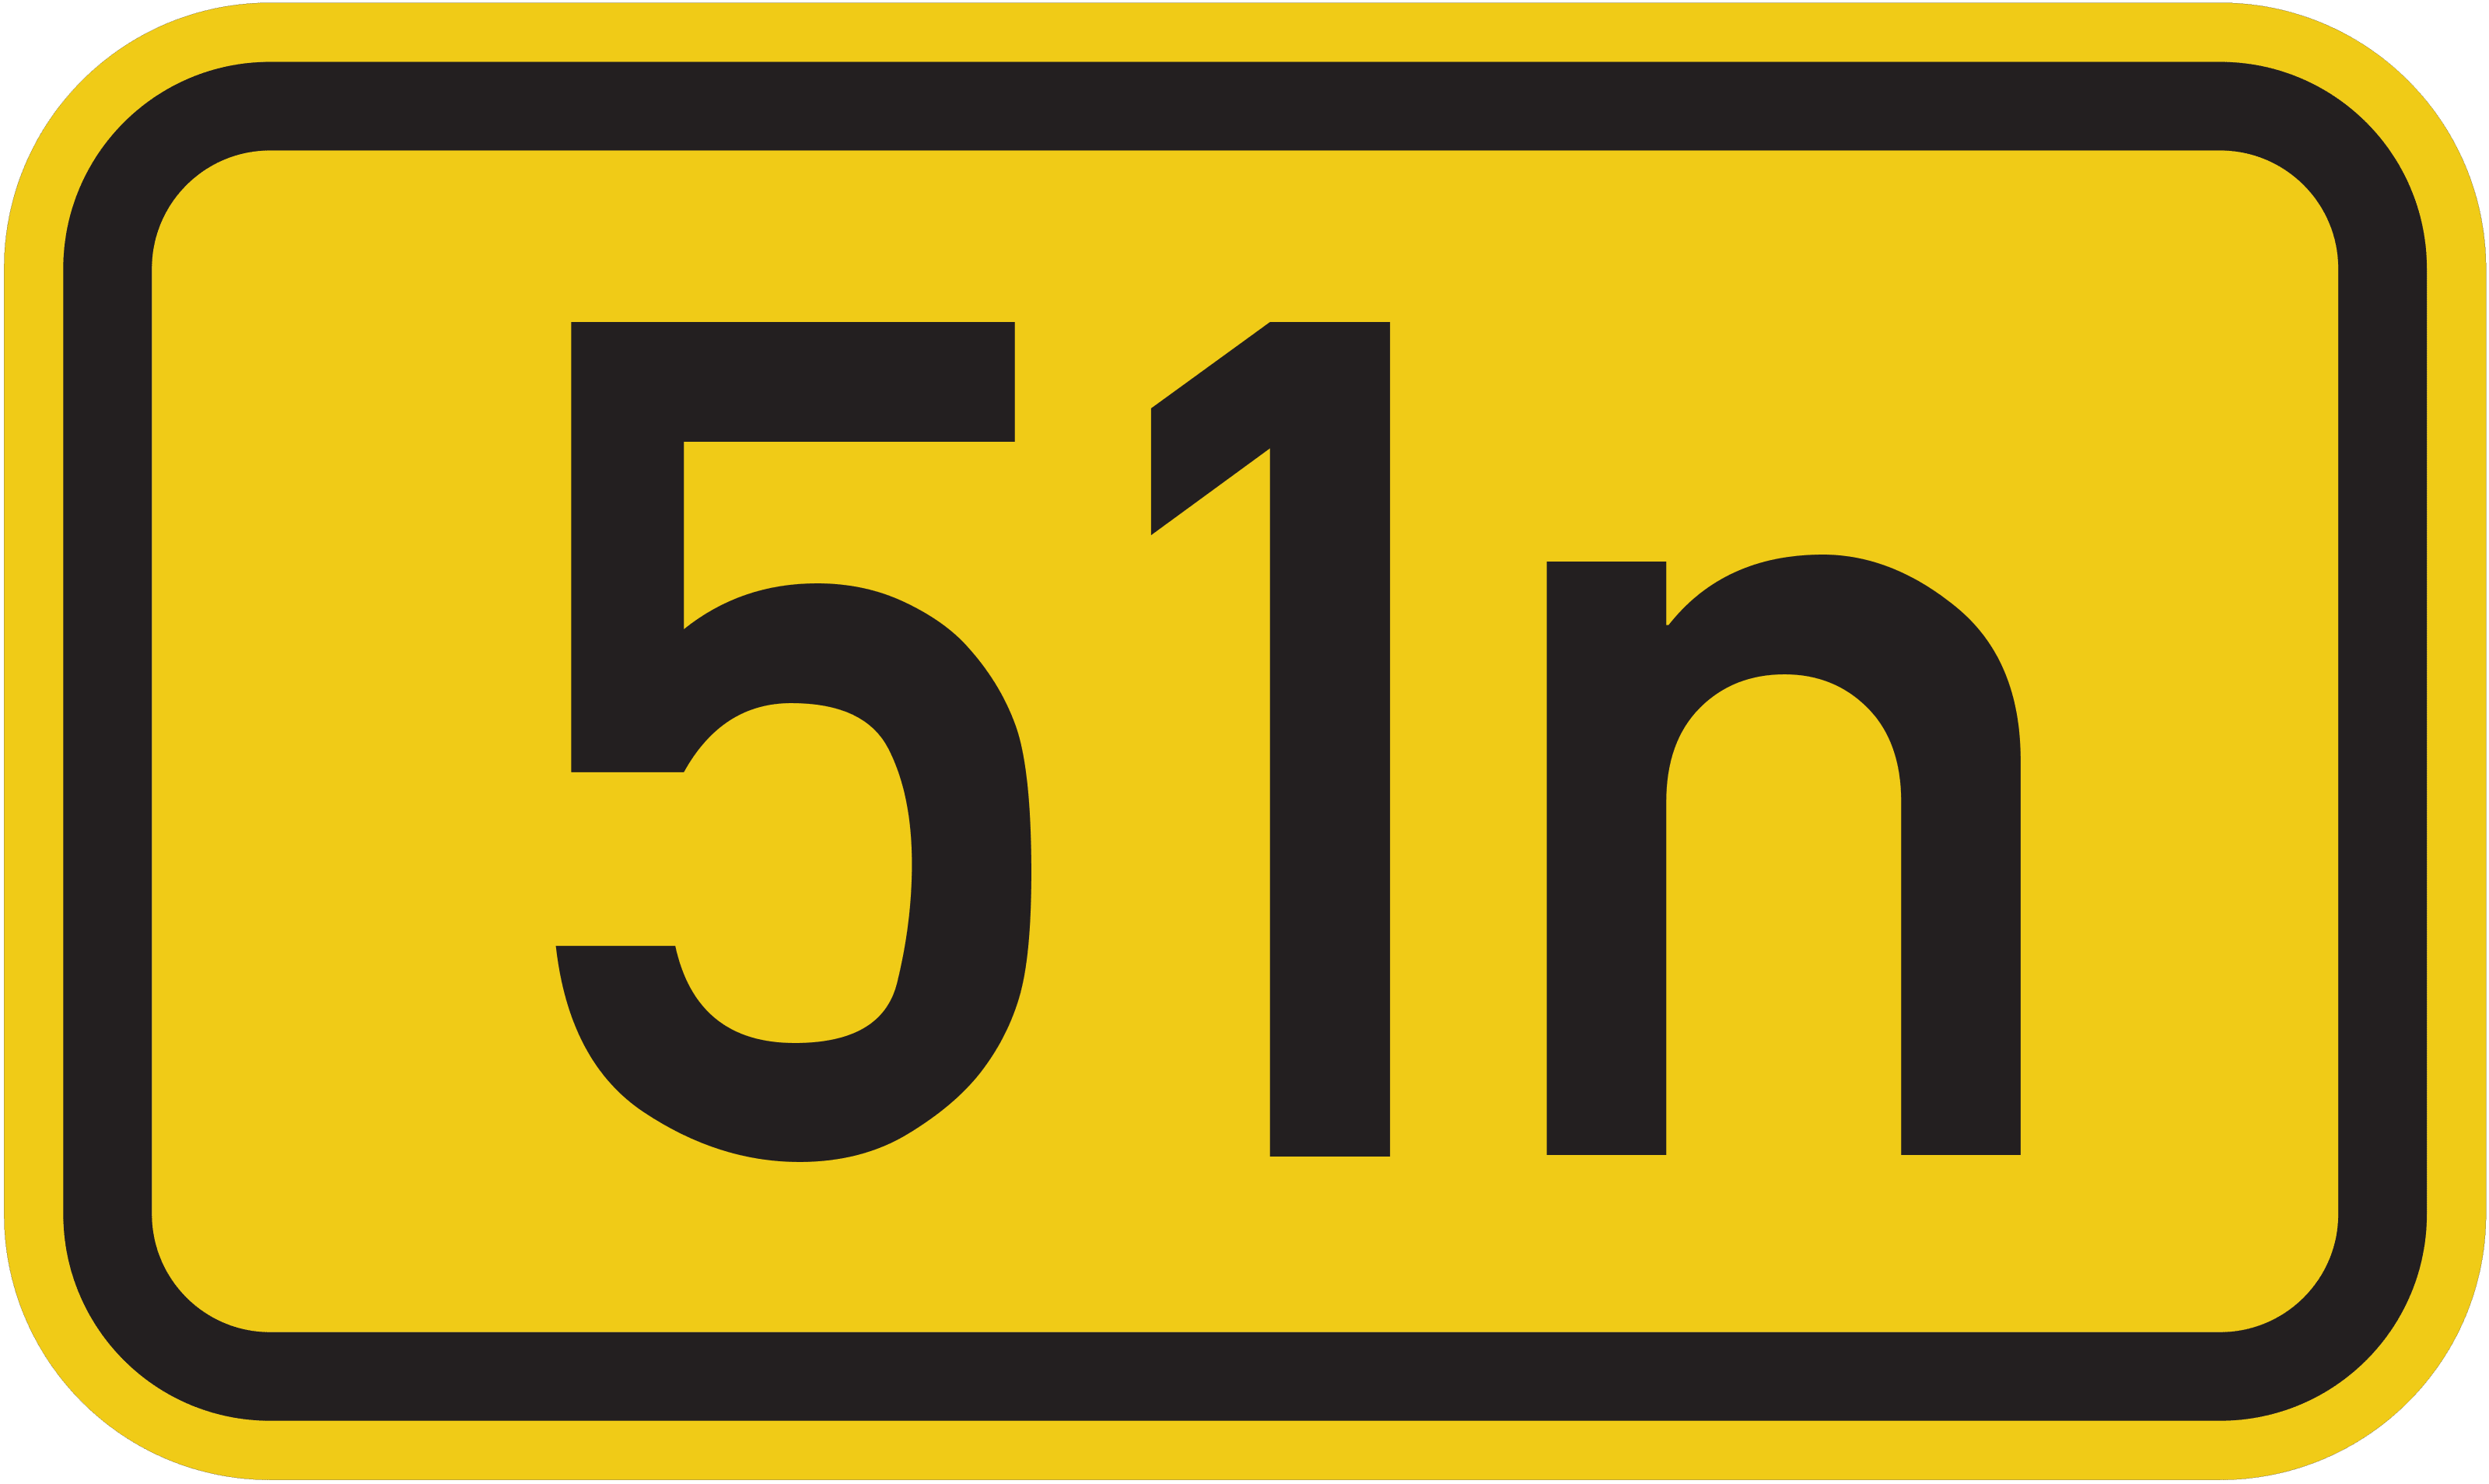 Straßenschild Bundesstraße 51n